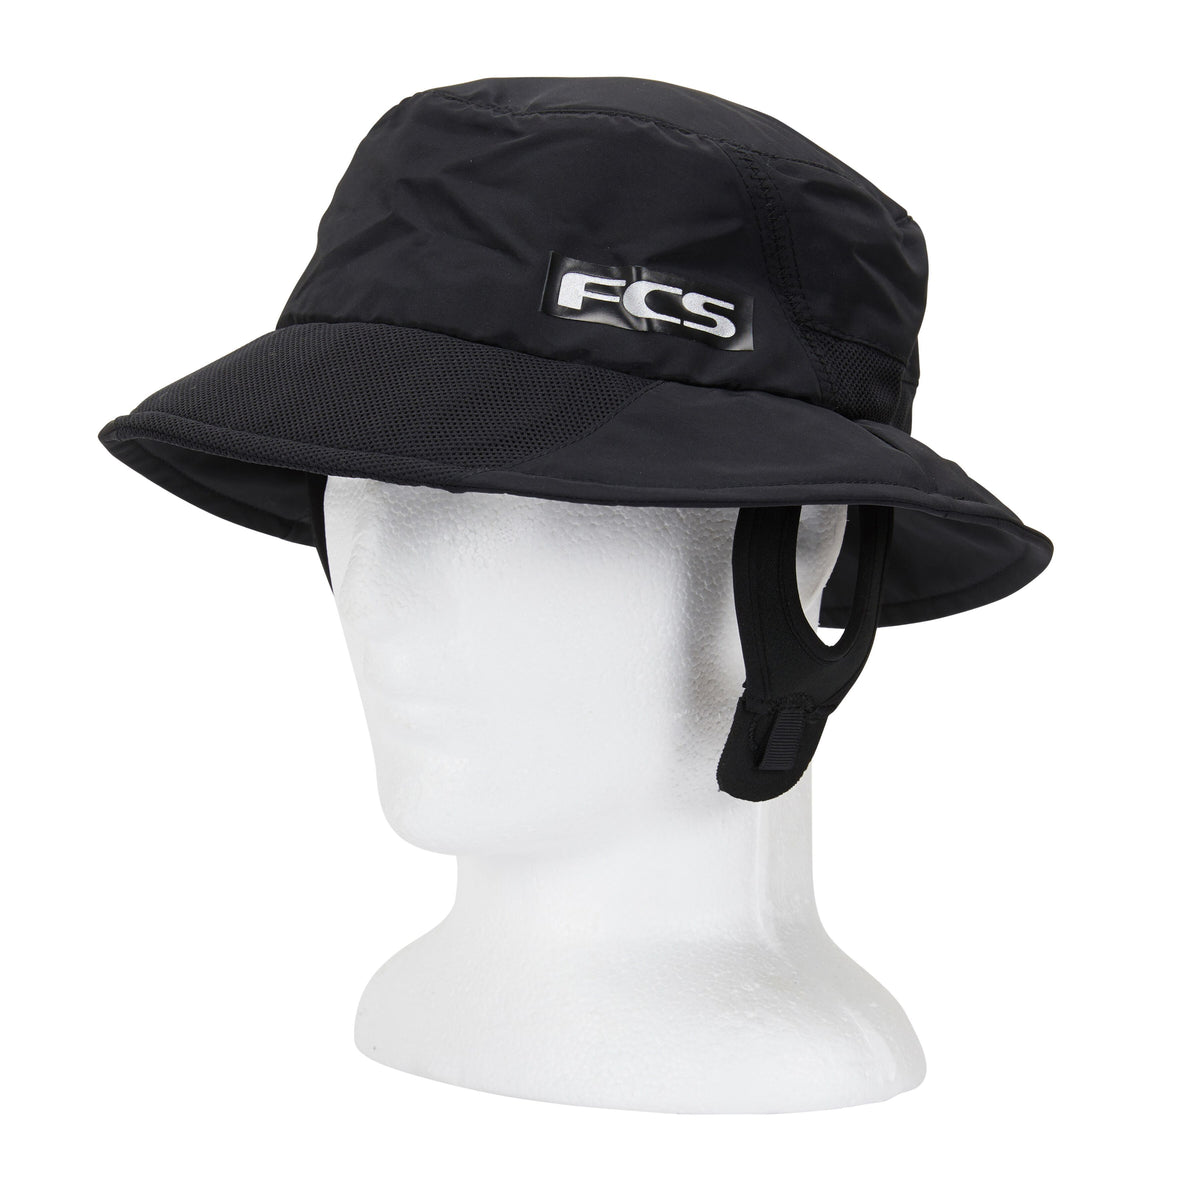 FCS ESSENTIAL SURF CAP - Caps - Wear - GONG Galaxy